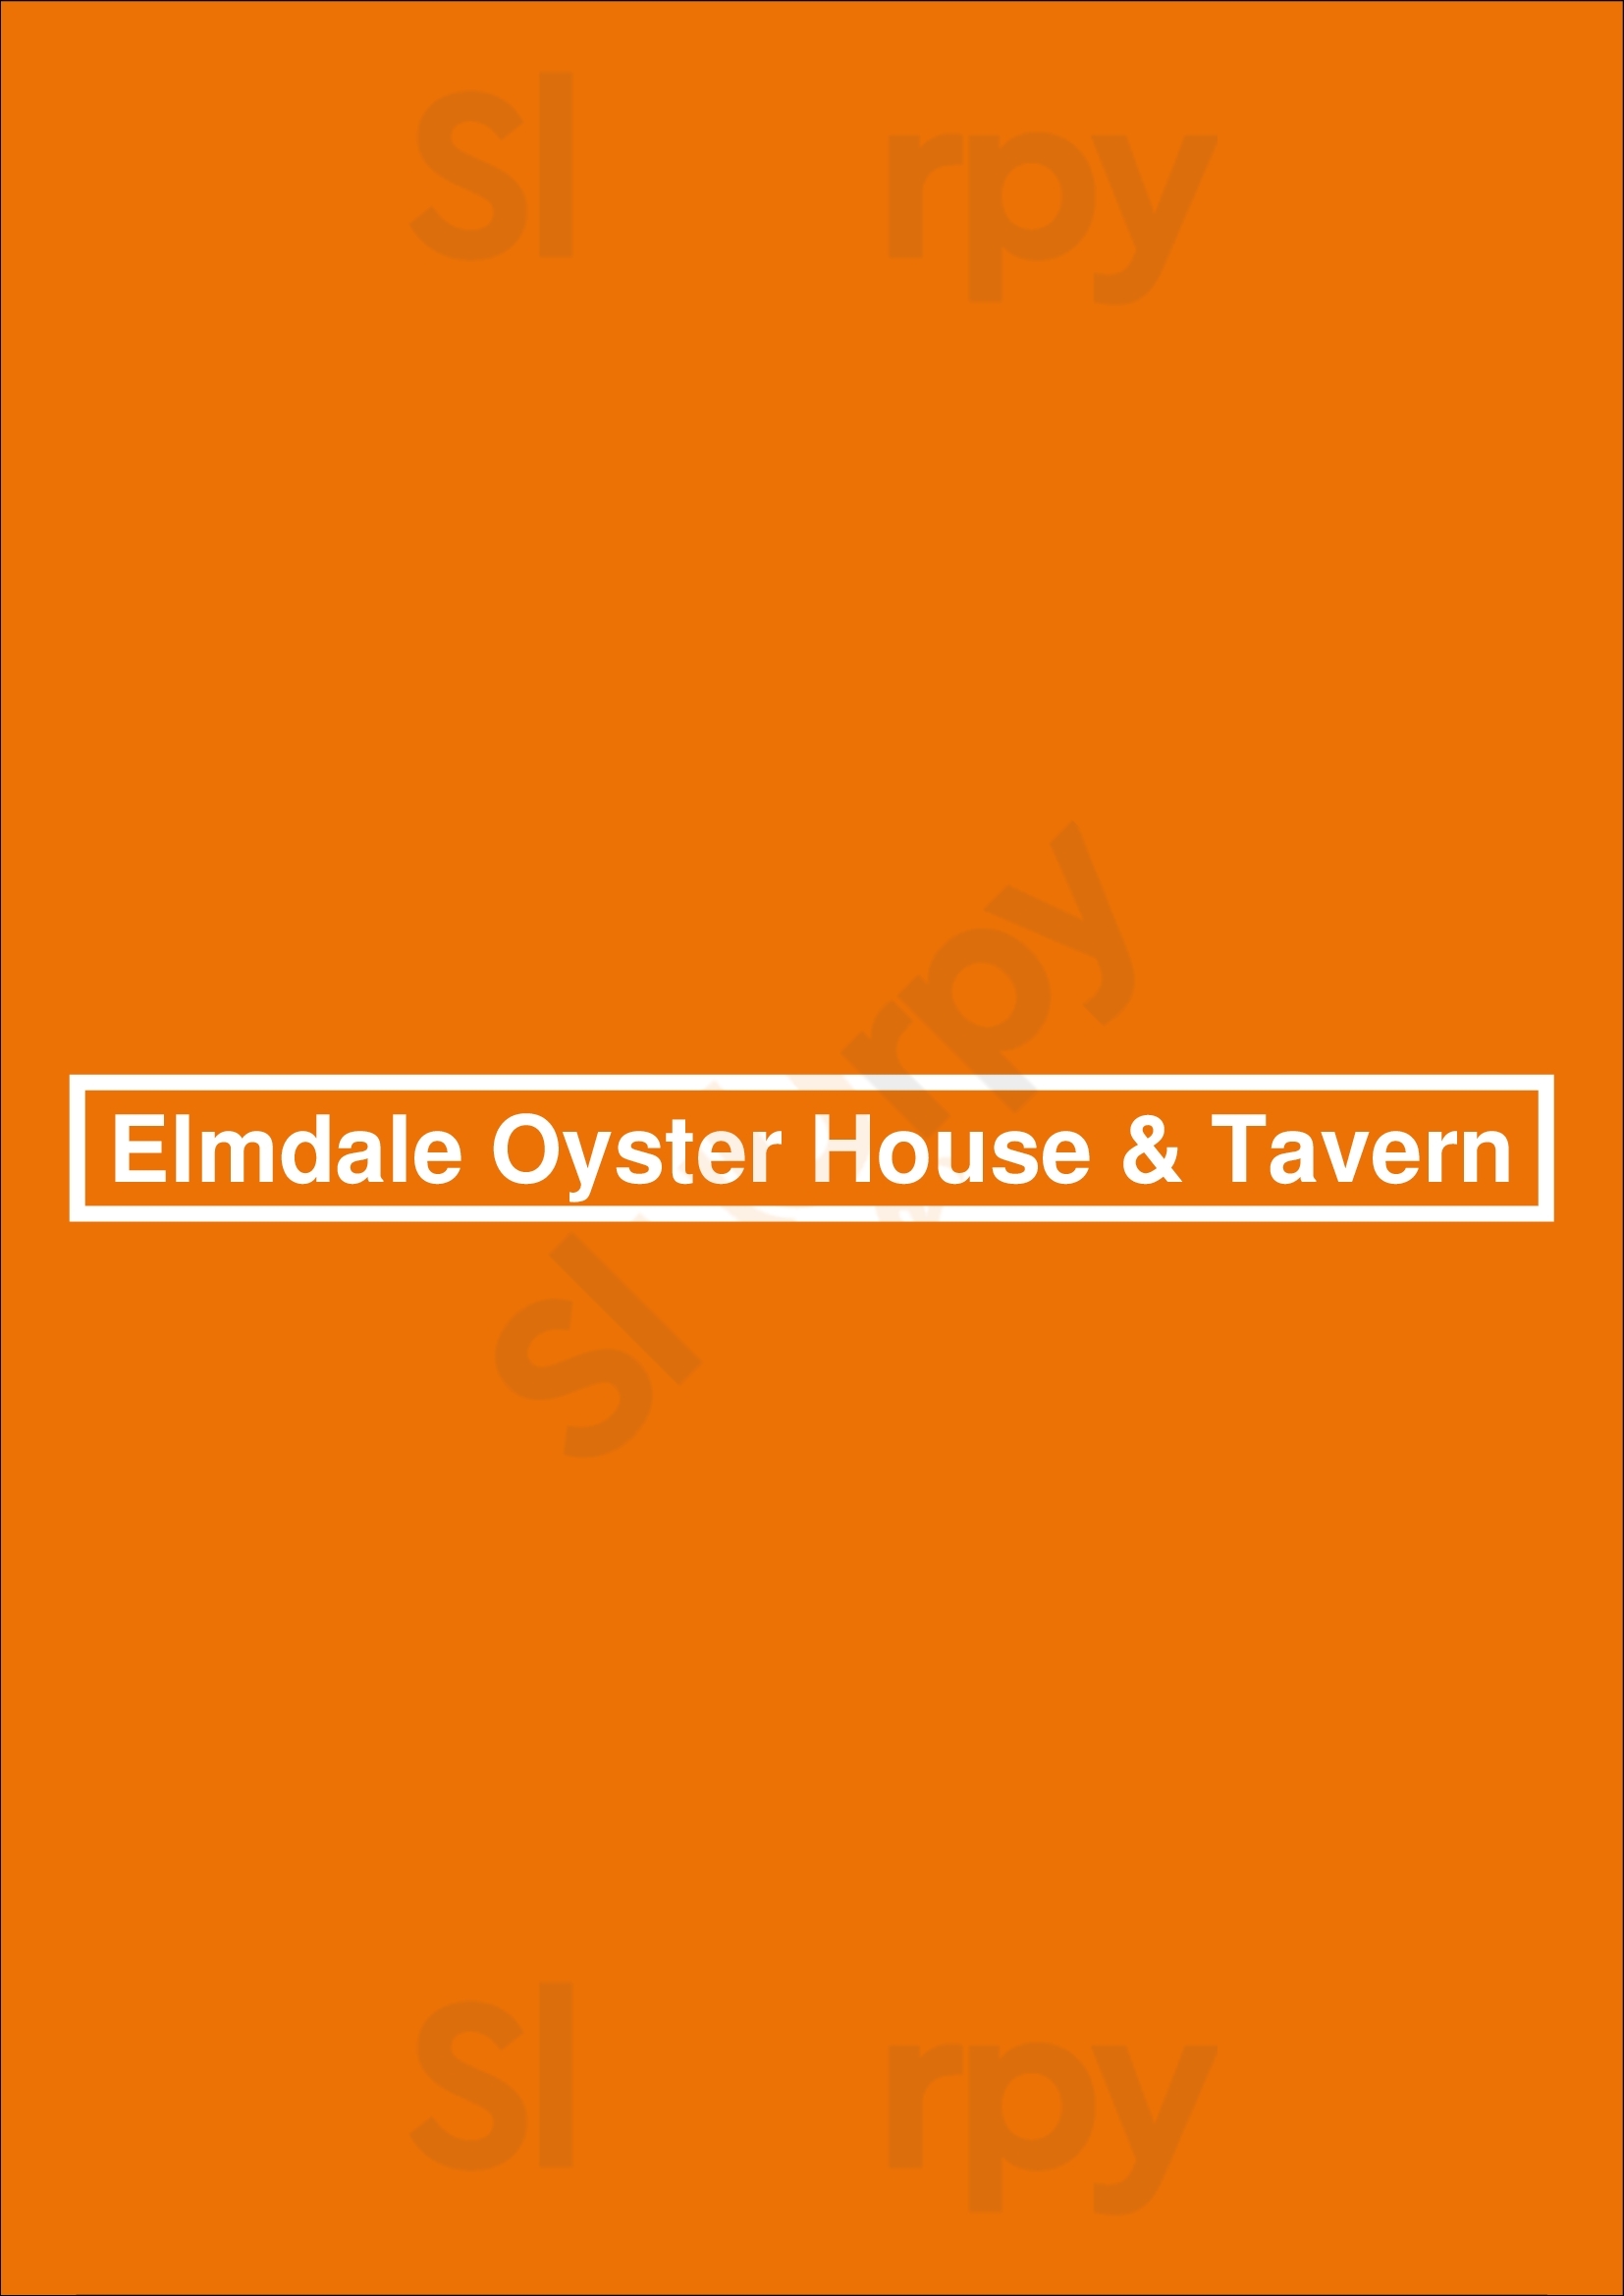 Elmdale Oyster House & Tavern Ottawa Menu - 1